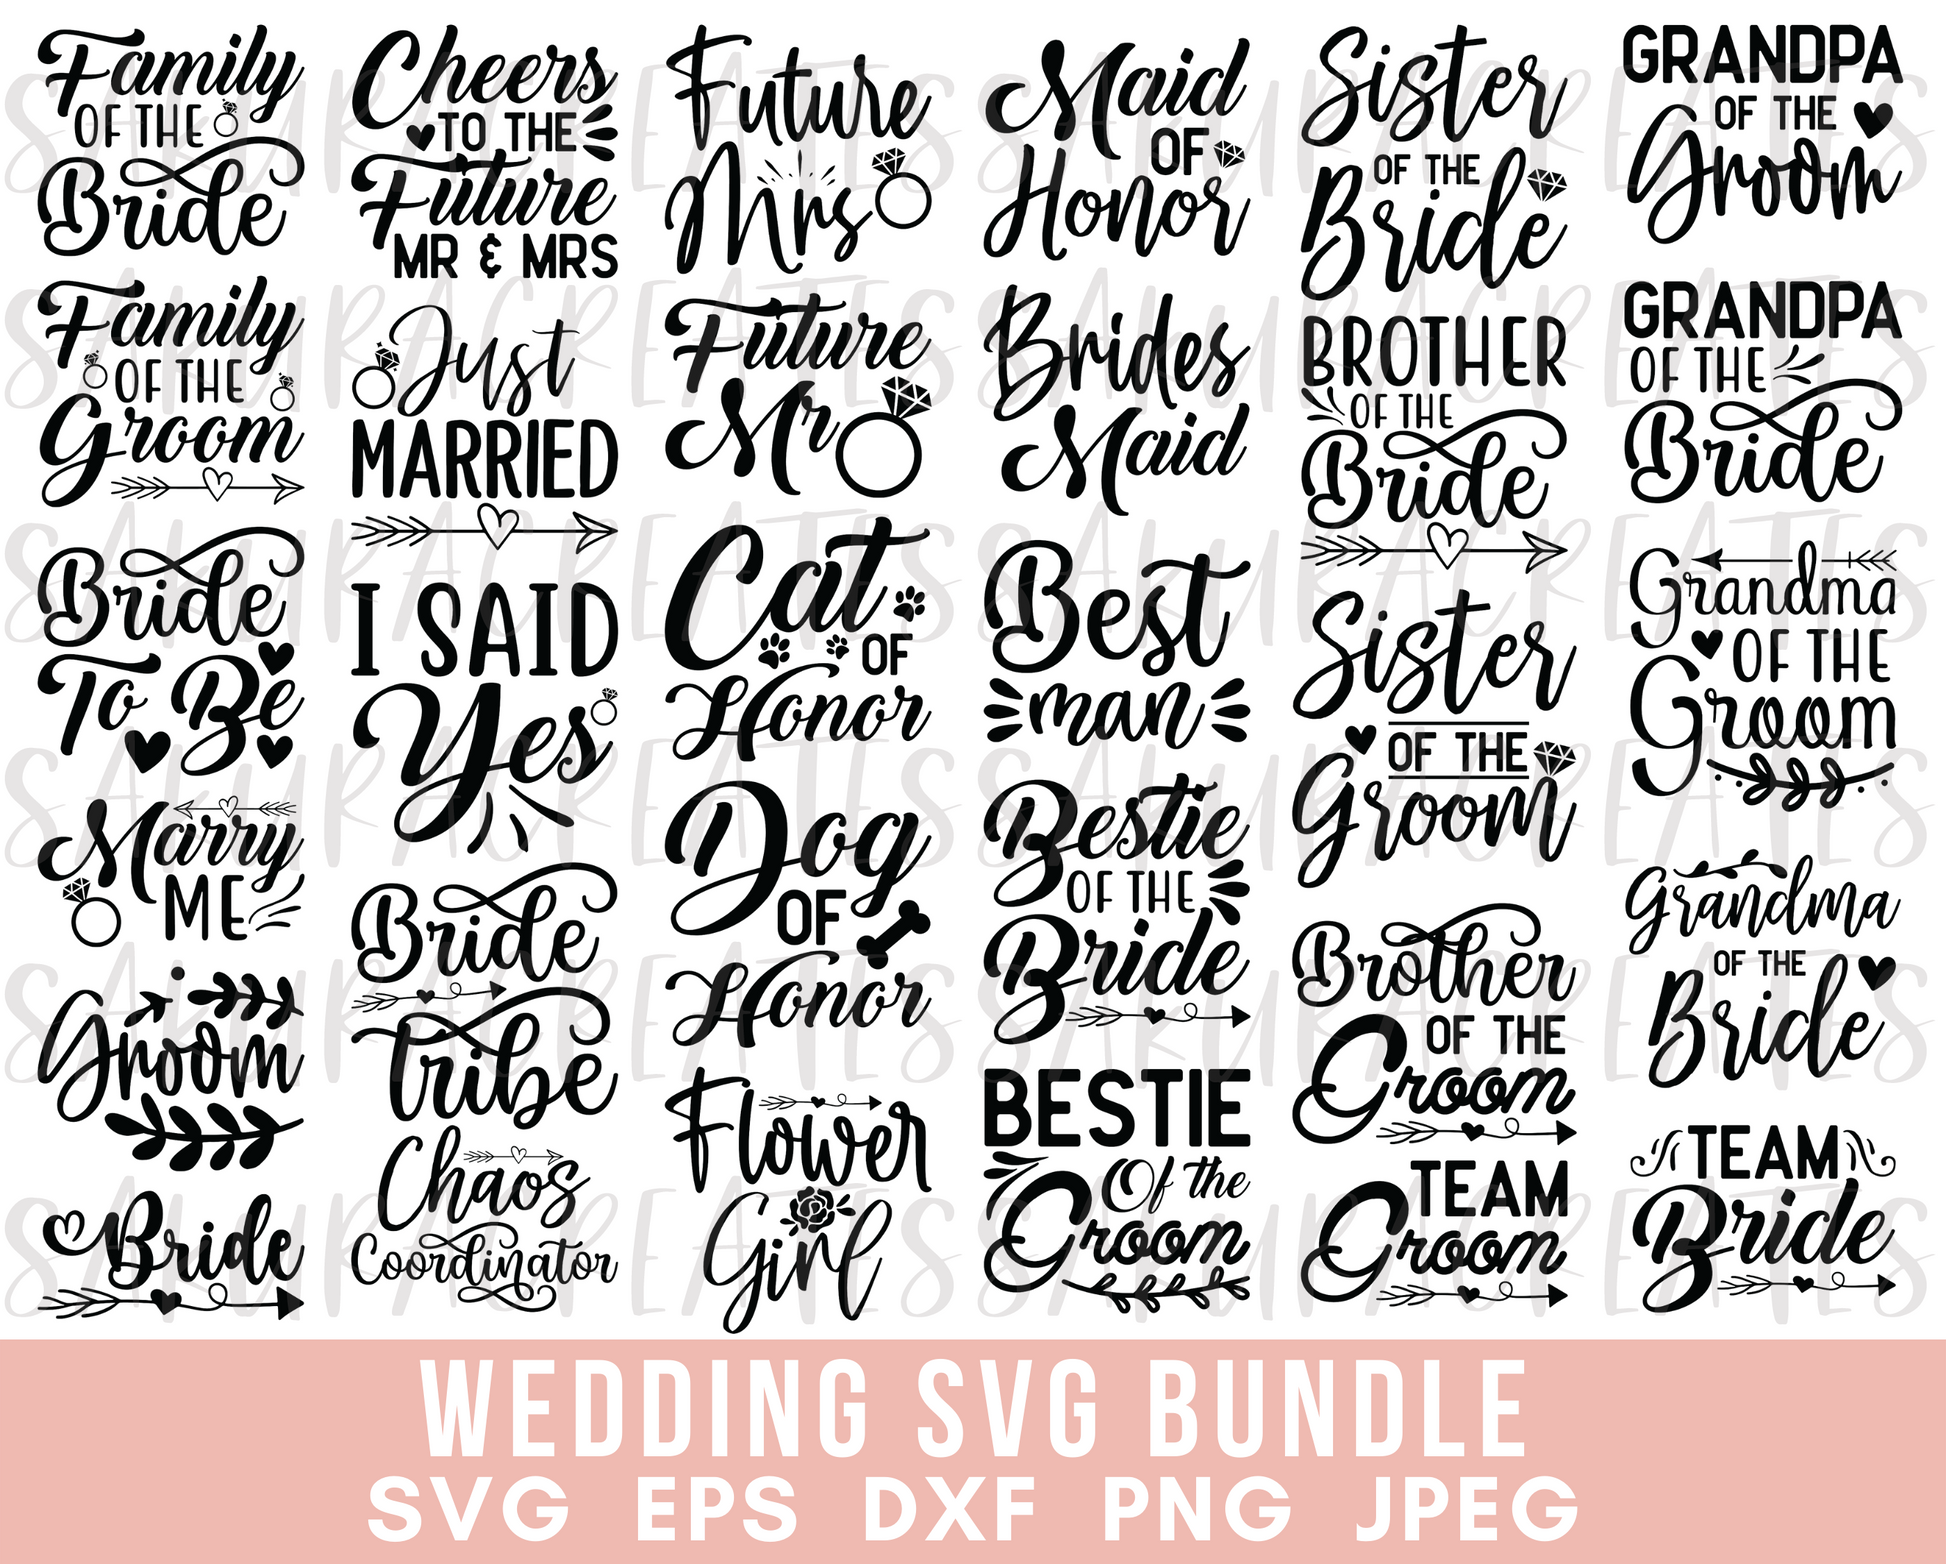 Wedding, Rose SVG, Valentine, Valentines SVG, Love SVG, By